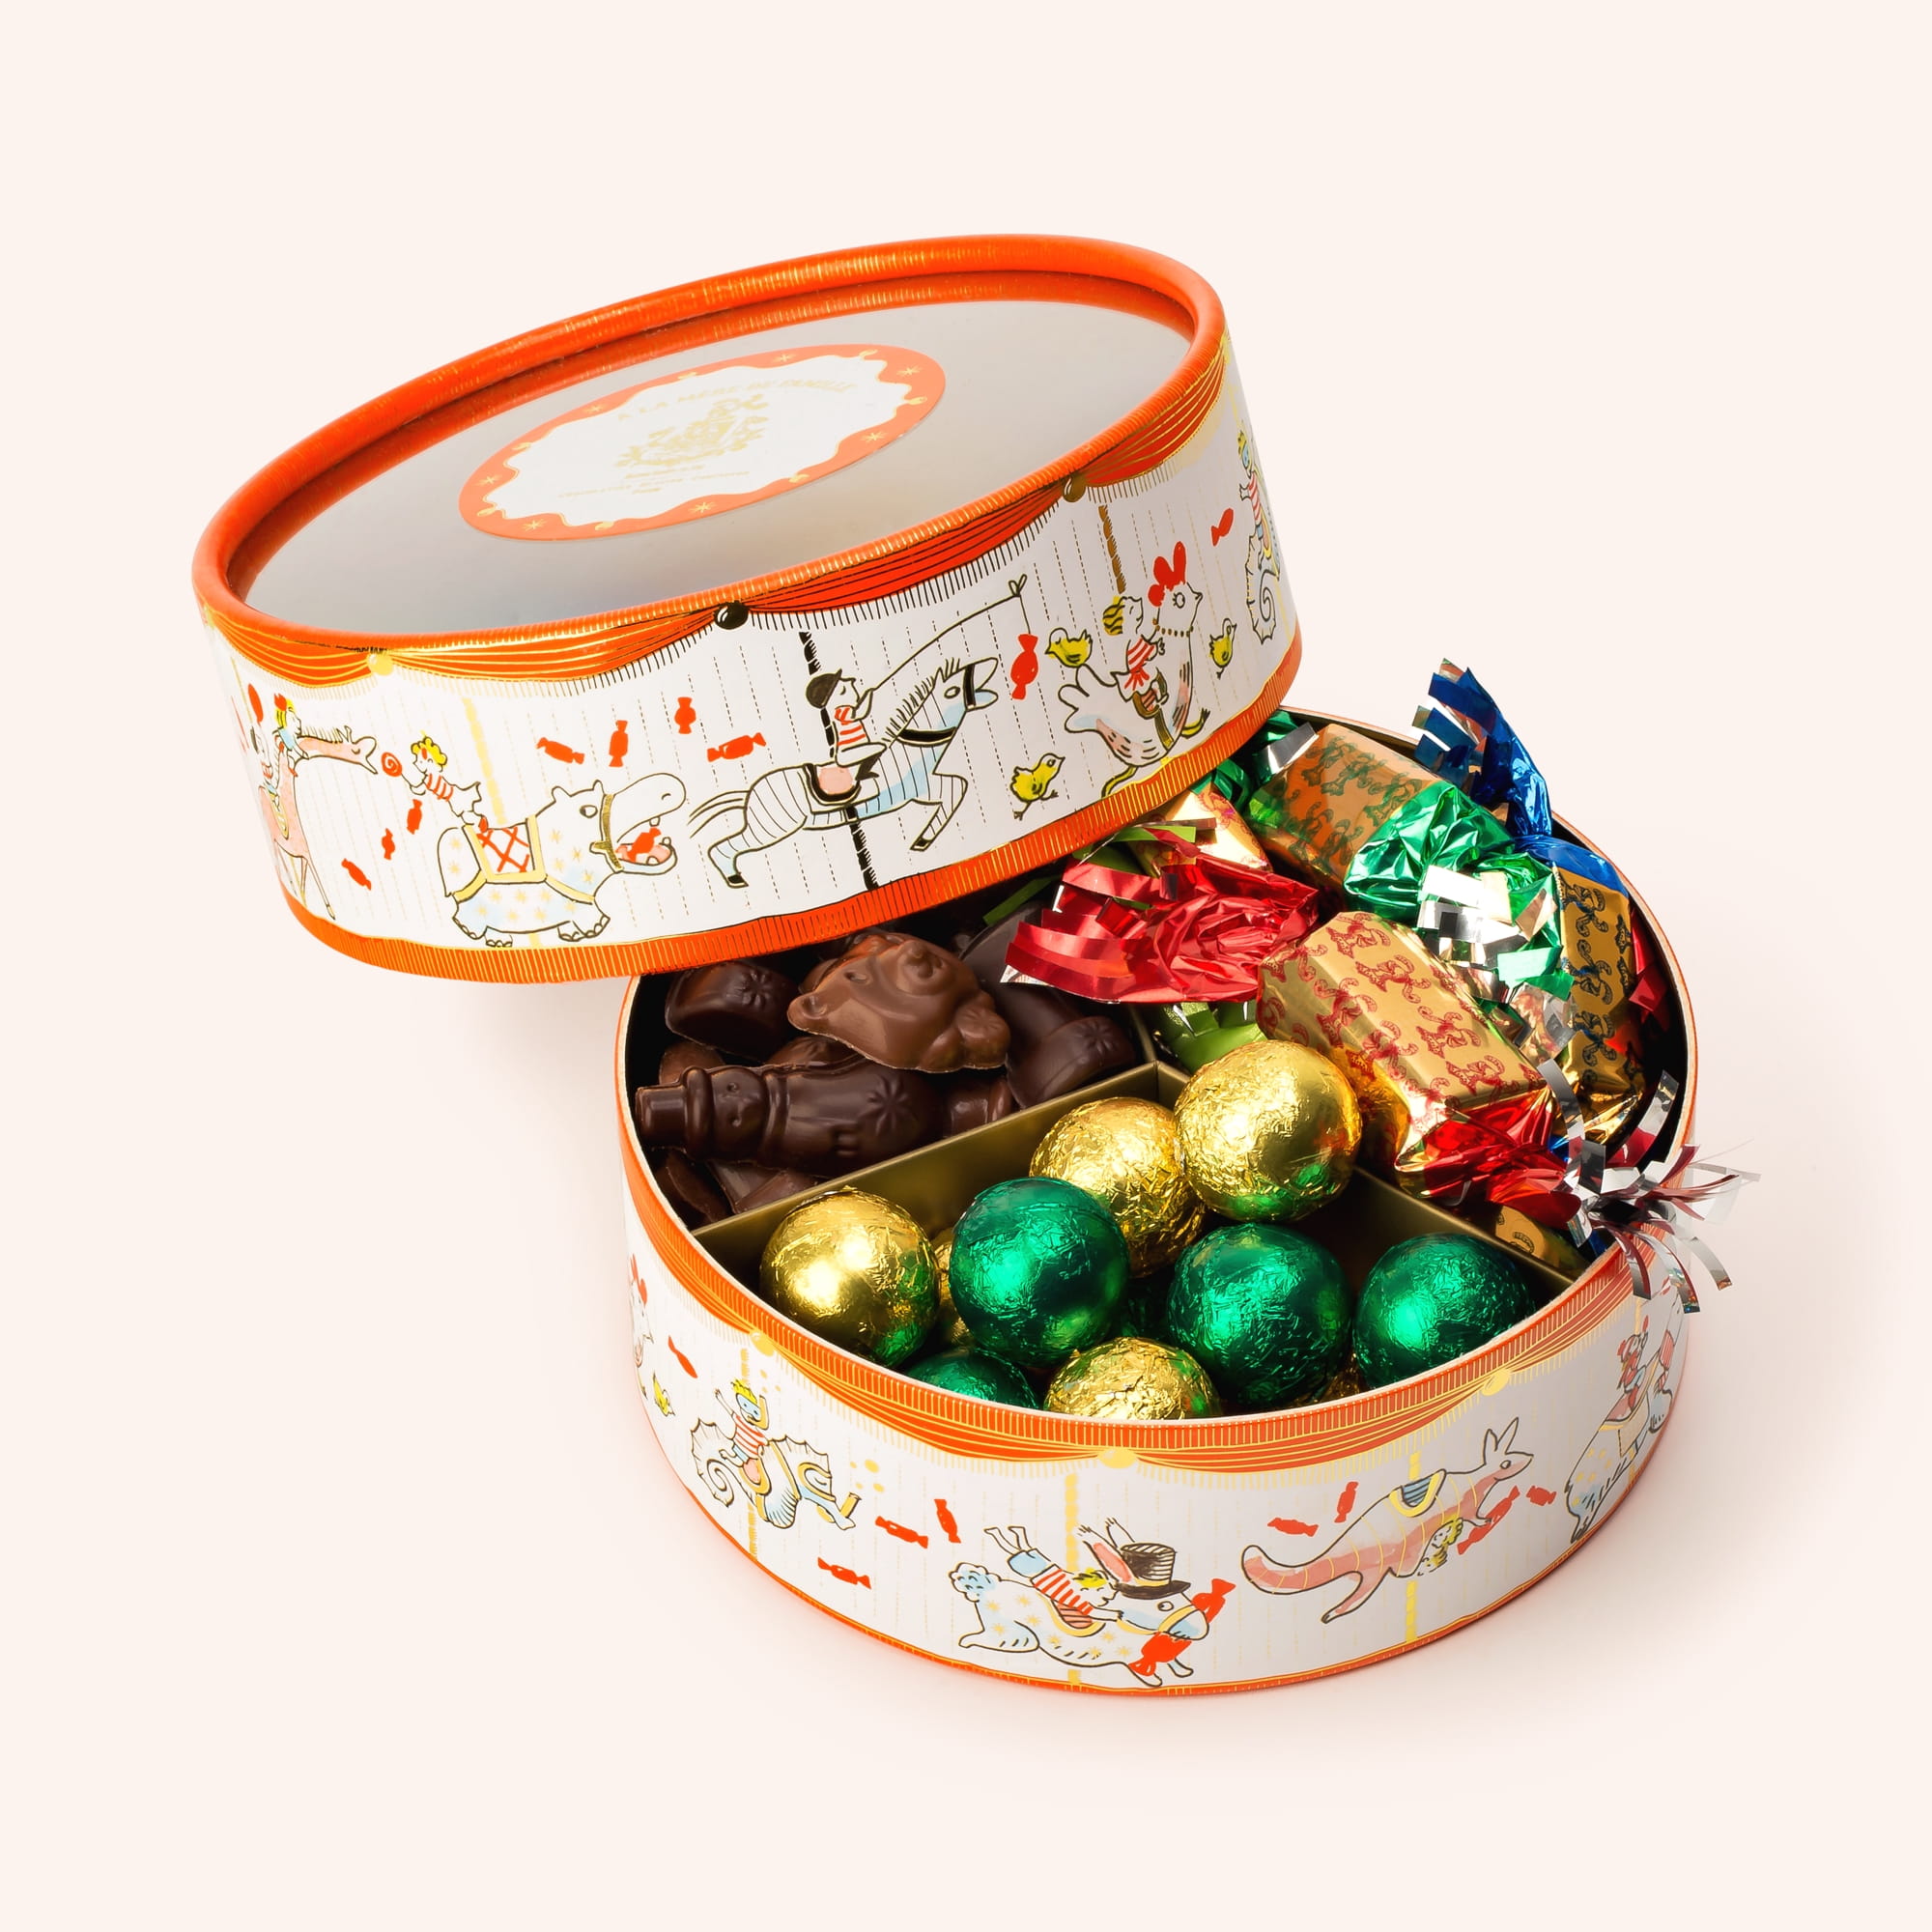 Chocolats Cadbury de Noël en France - QK Confiserie